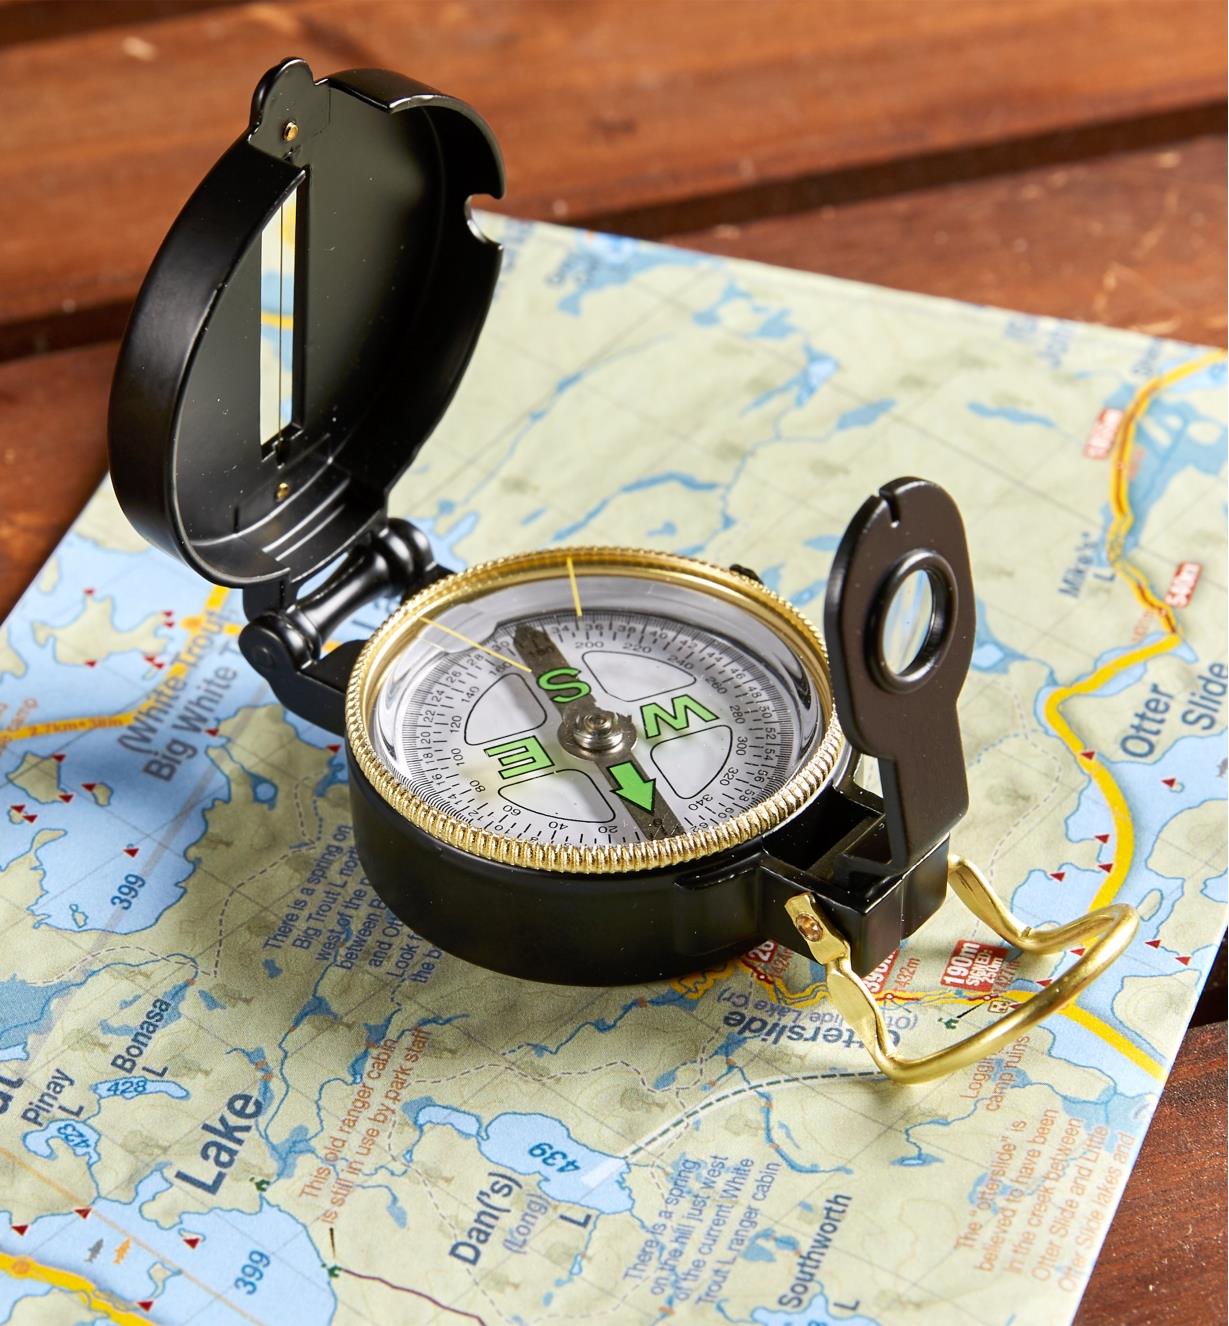 Compass on map "True North"